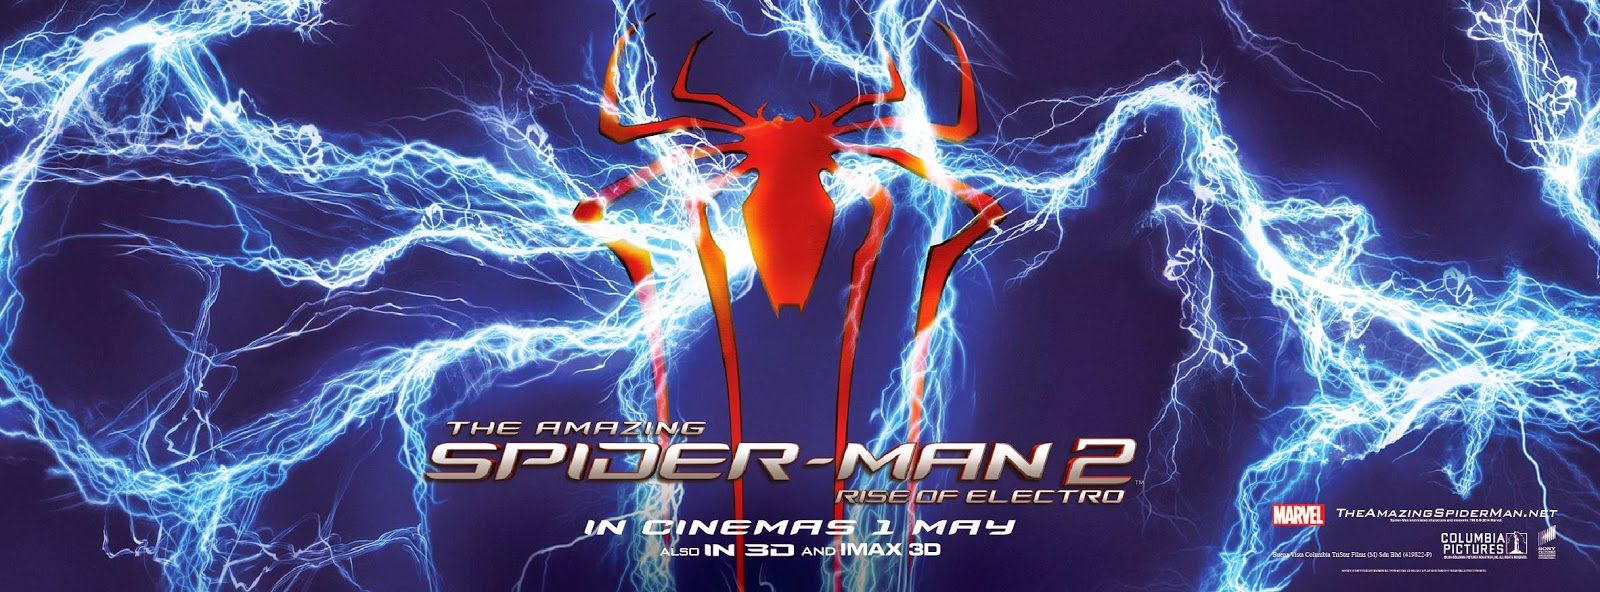 The Amazing Spider-Man 2 Banner